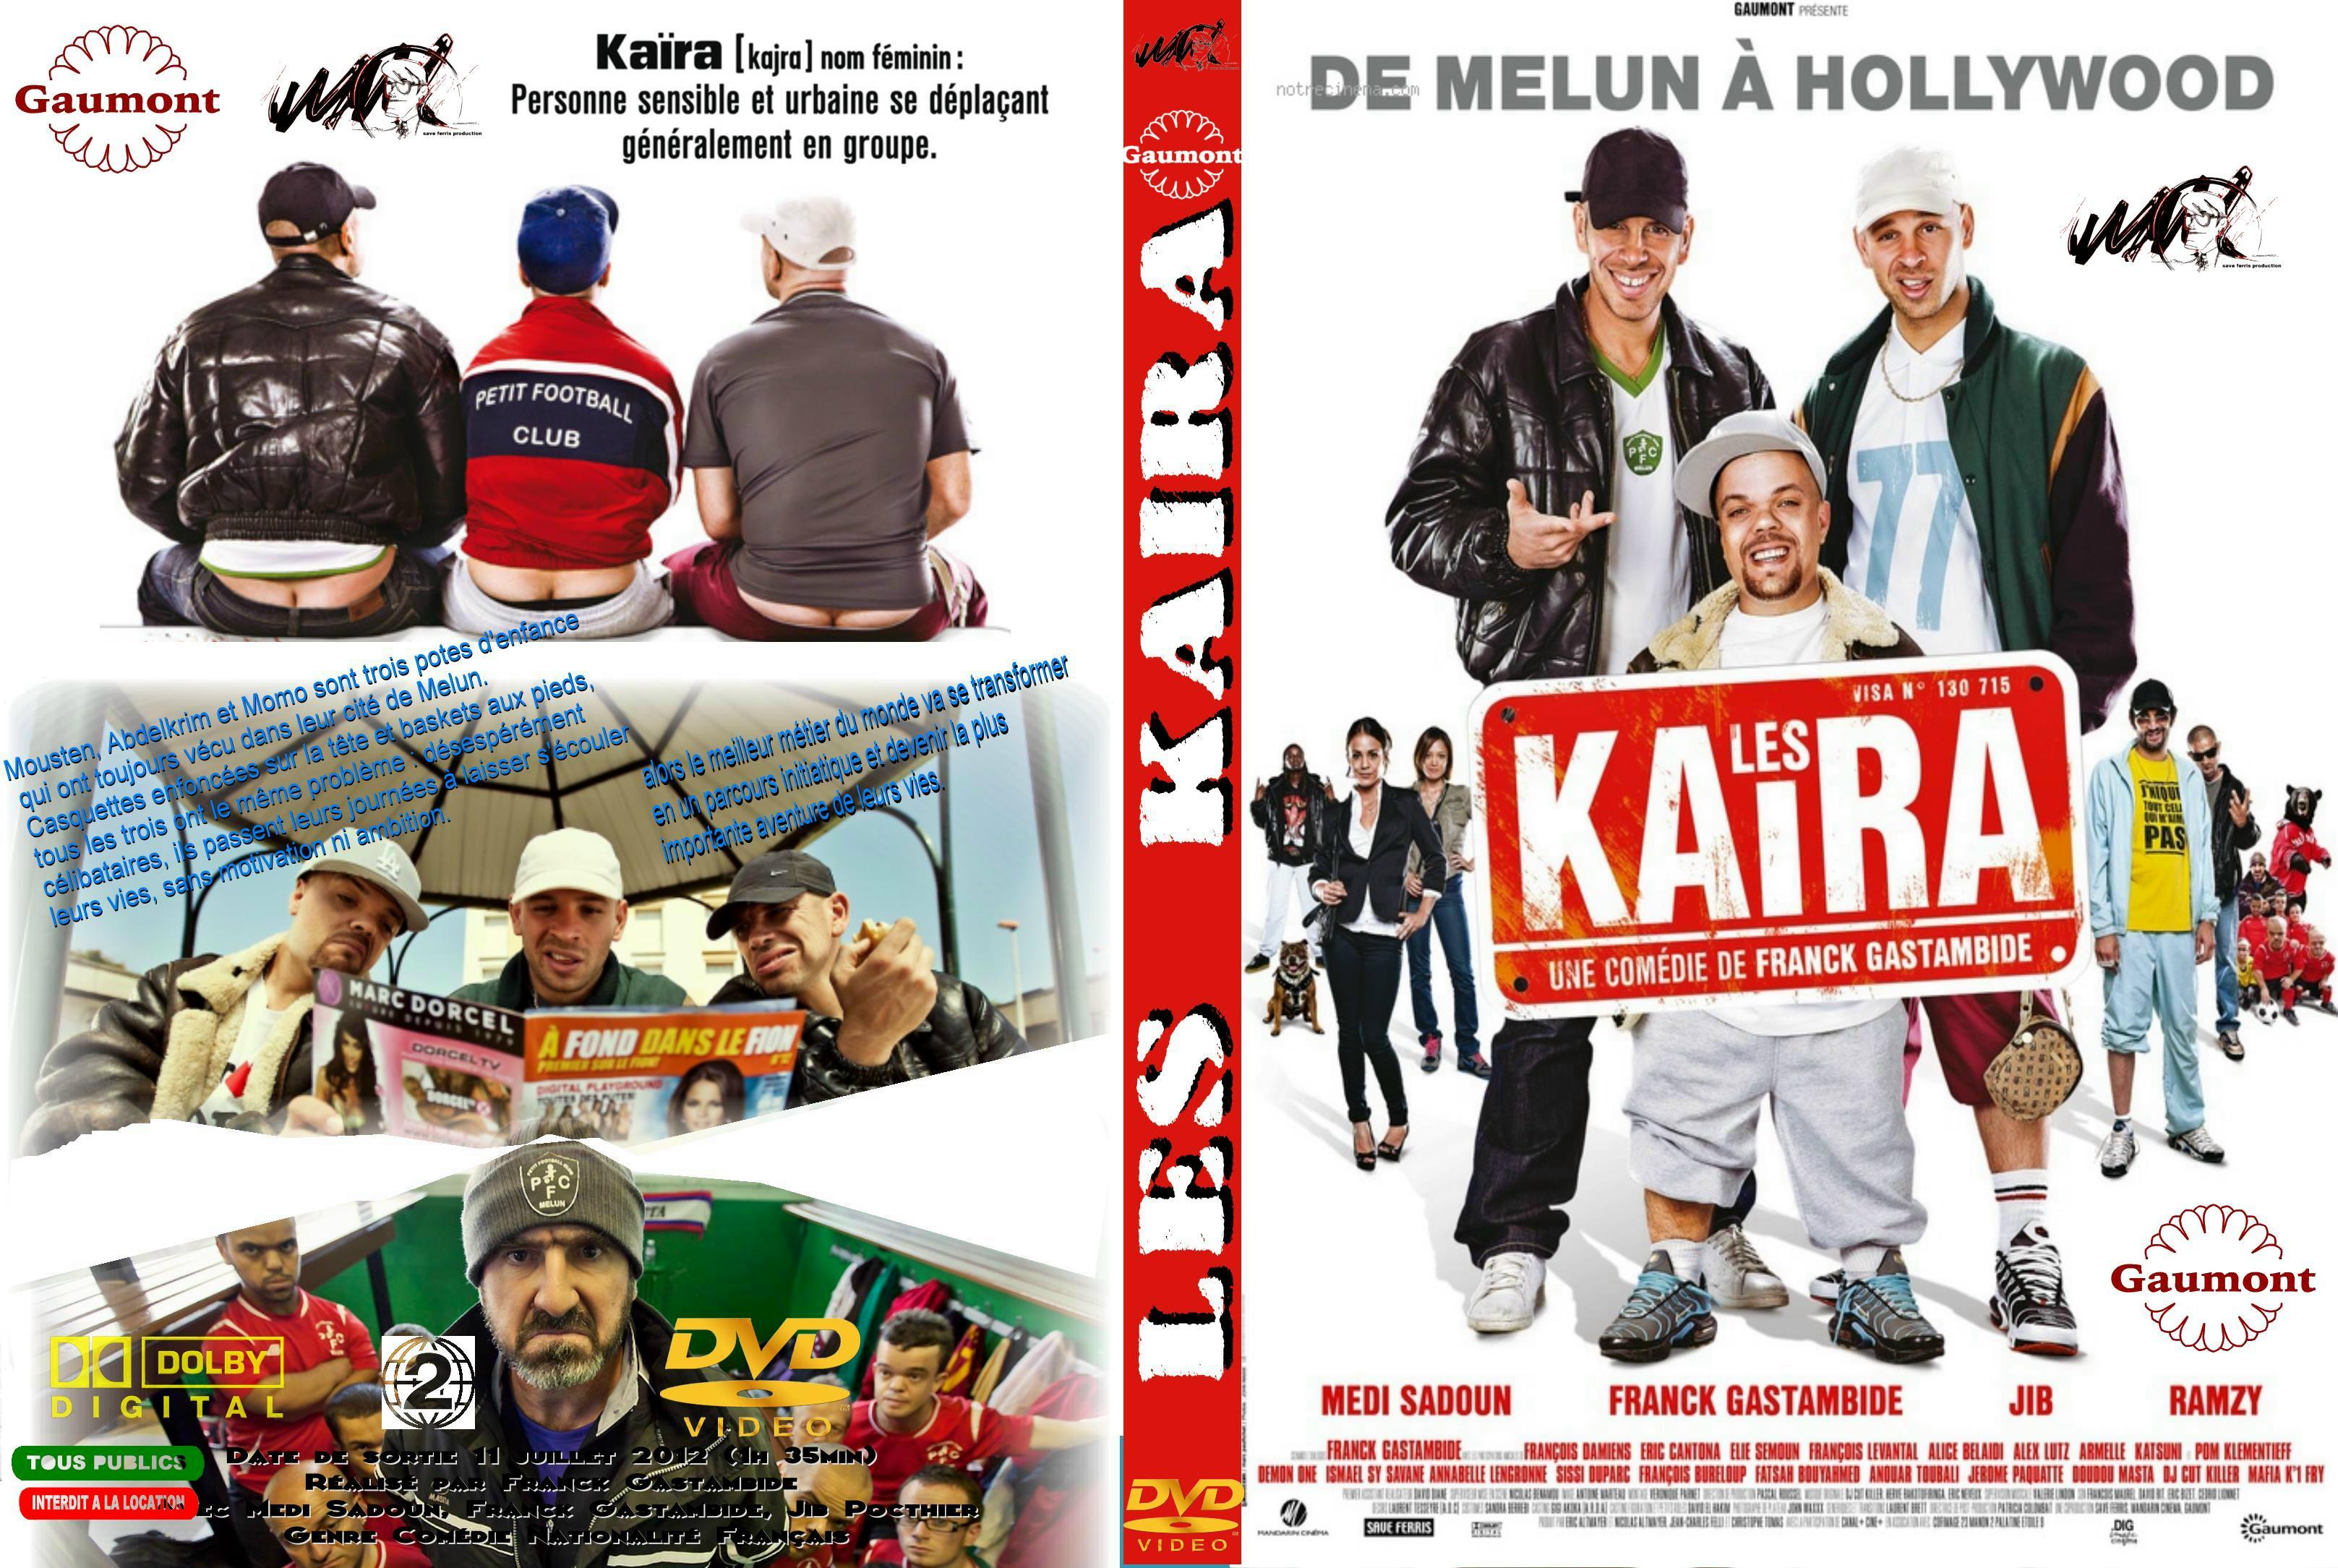 Jaquette DVD Les kaira custom